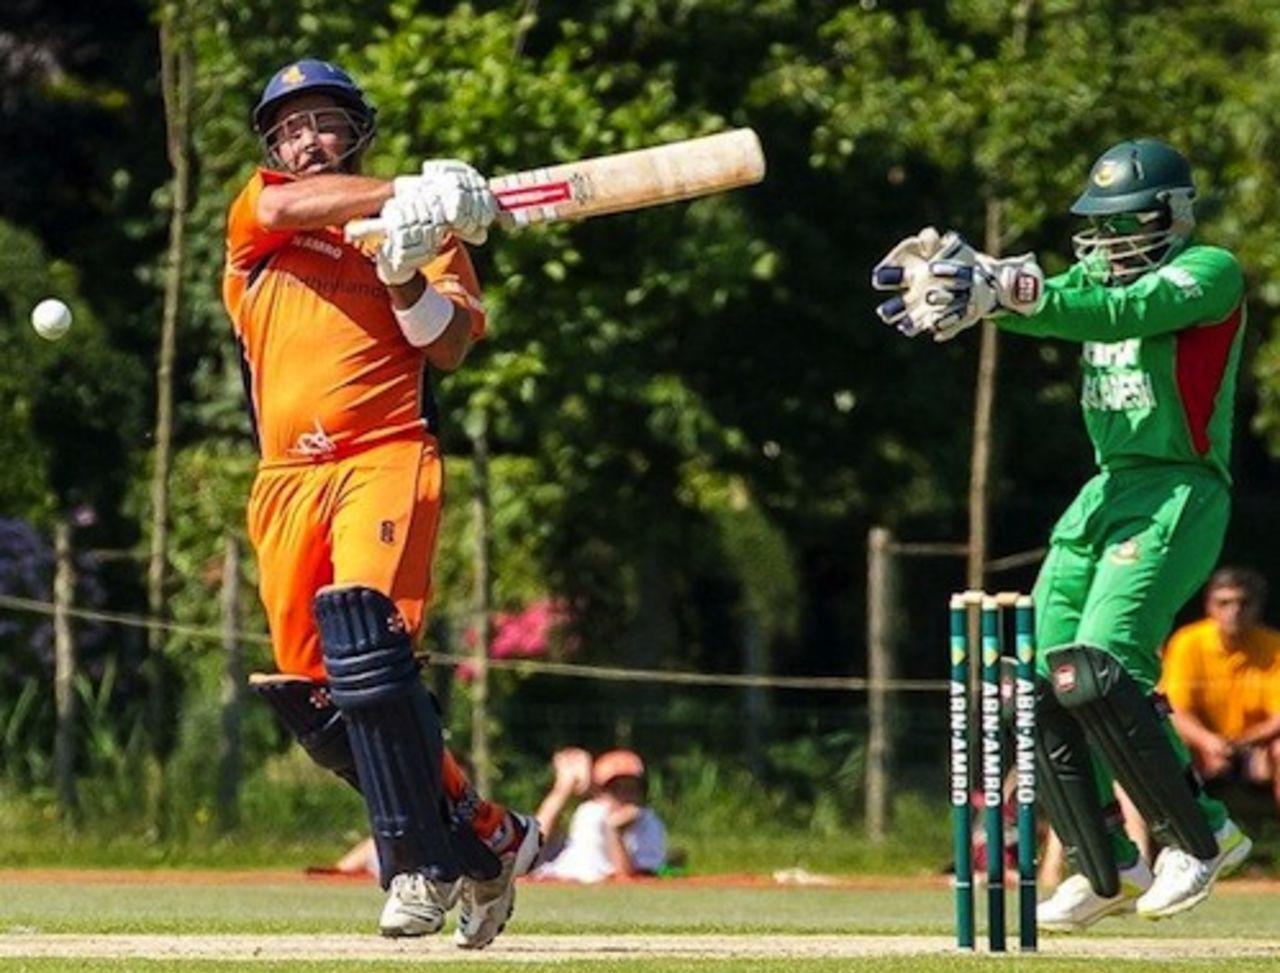 Michael Swart scored 61 in Netherlands' one-run victory, Netherlands v Bangladesh, 2nd Twenty20, The Hague, July 26, 2012